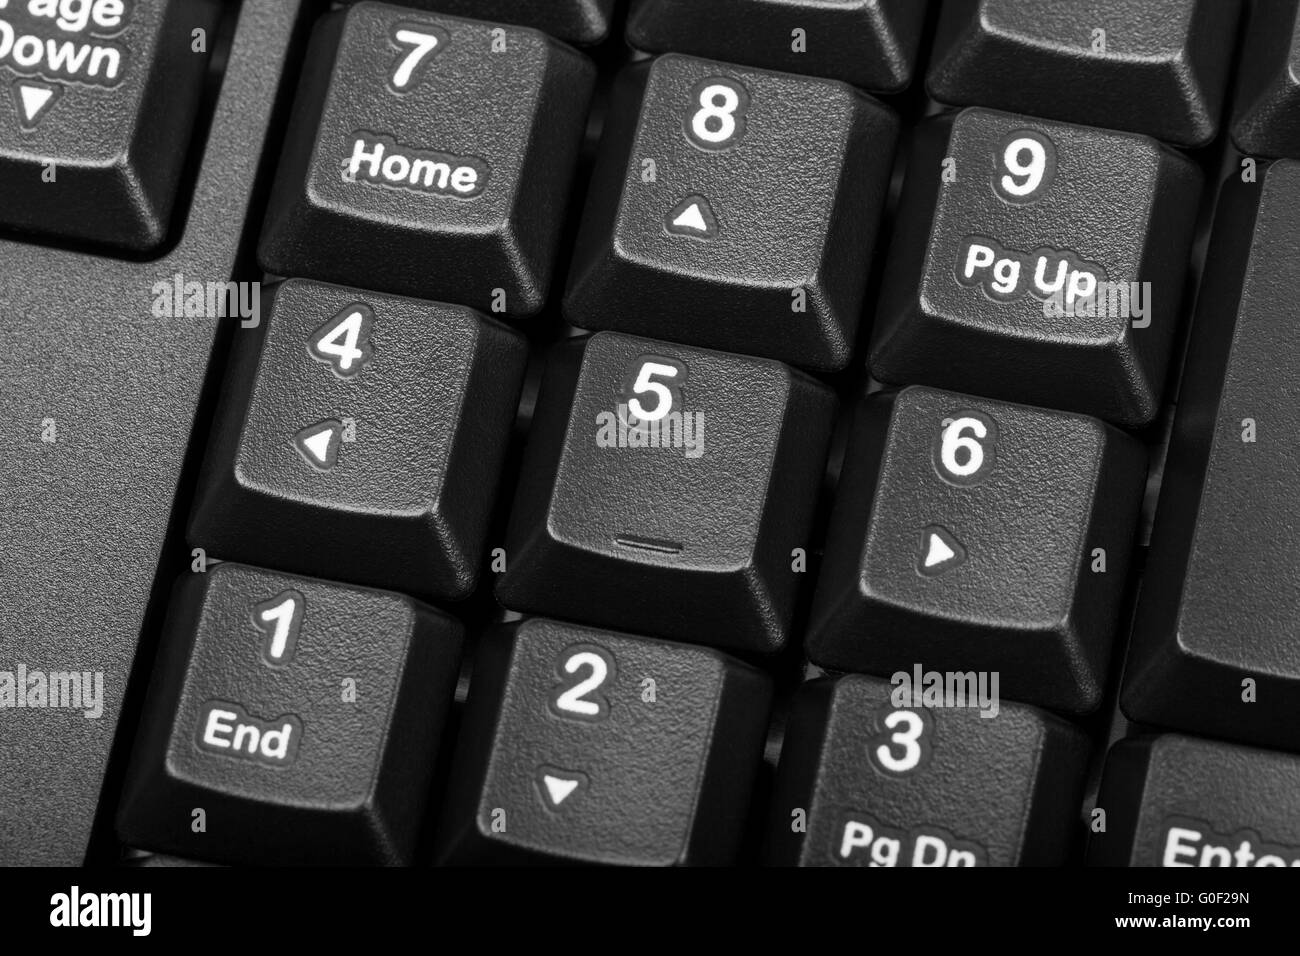 numeric keypad on the black computer keyboard Stock Photo